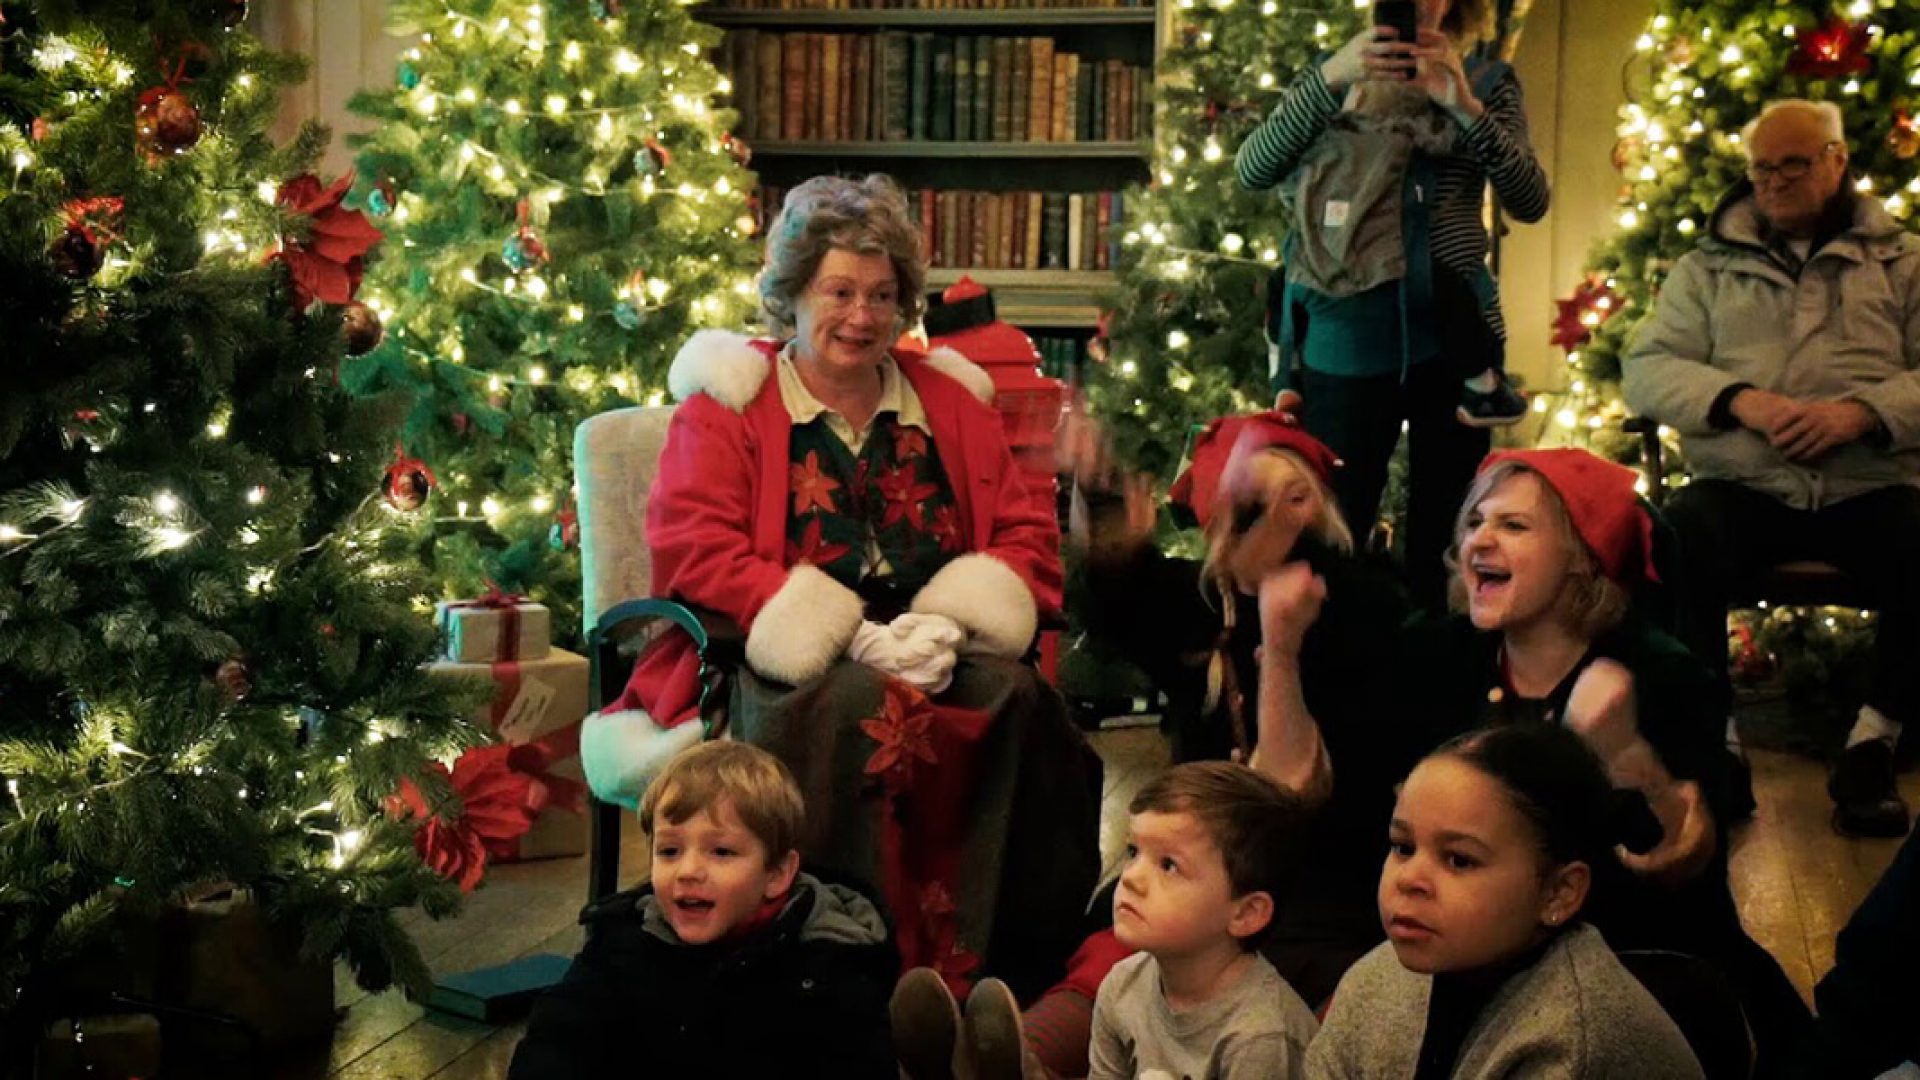 Warwick Castle Christmas Video Promotes Festive Activity